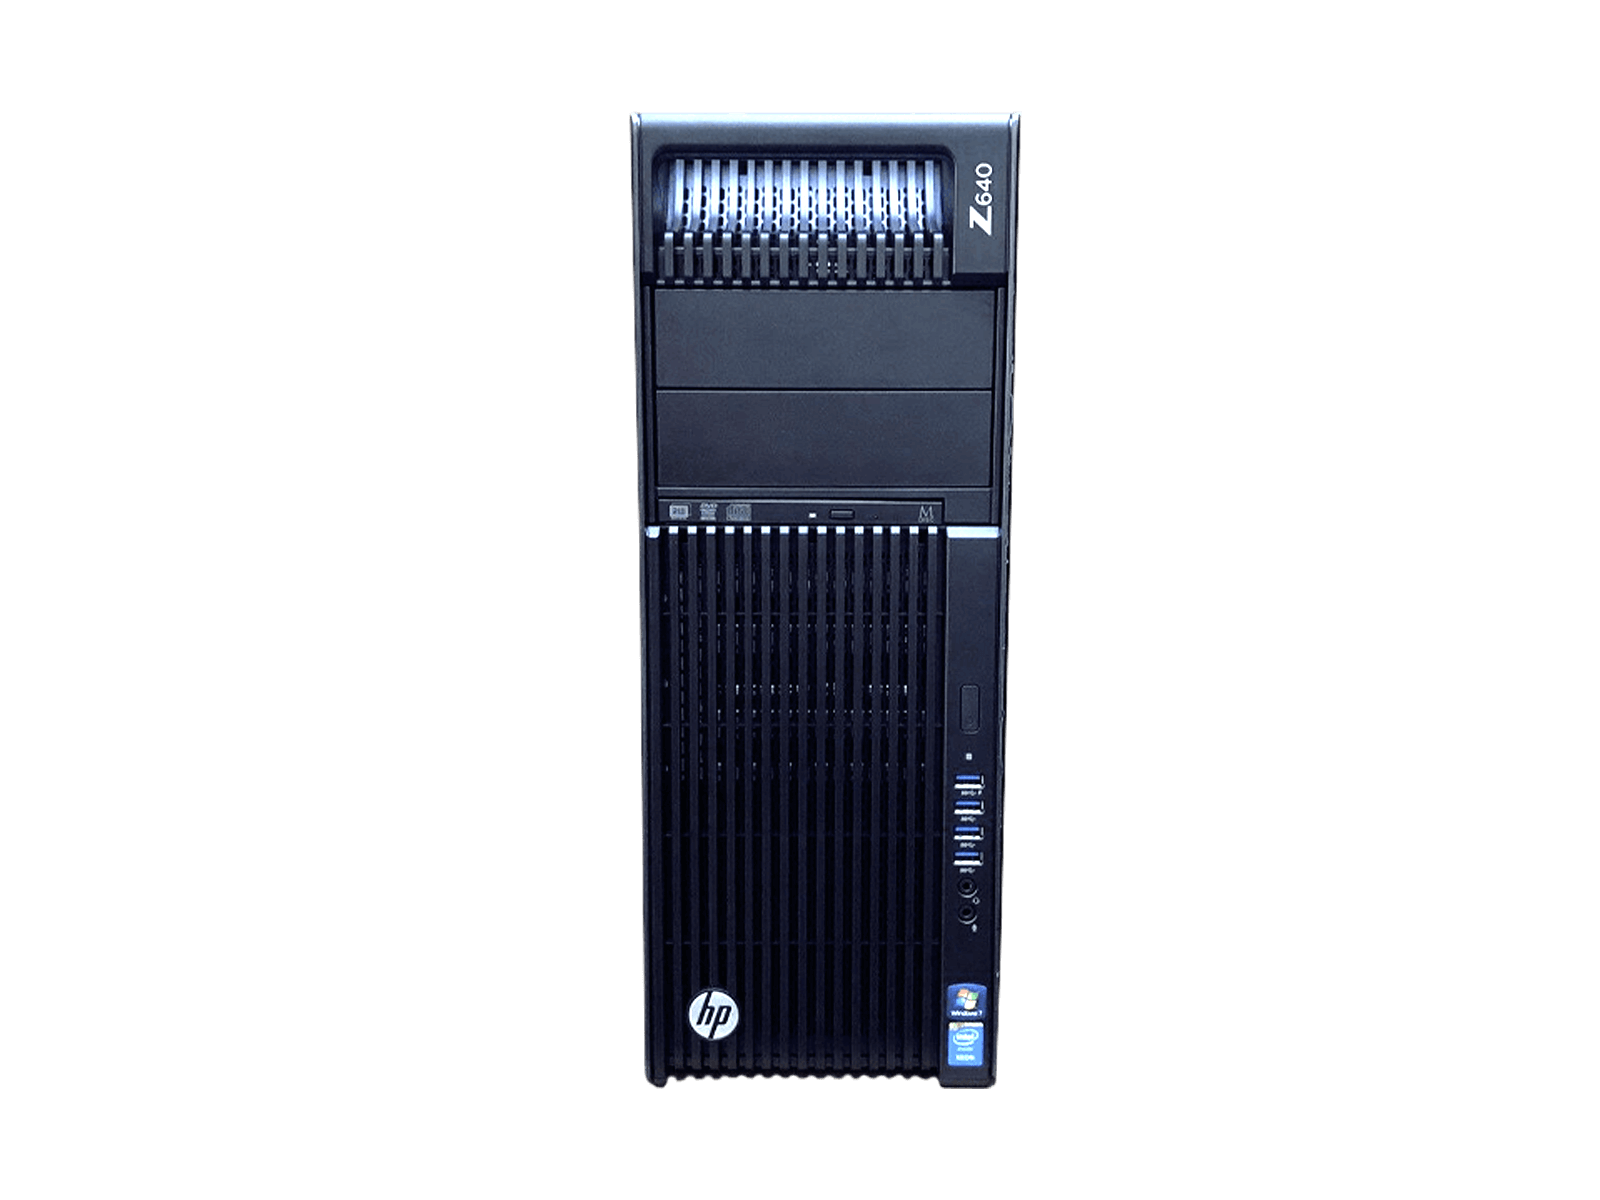 HP Z640 Workstation Two 8C Xeon E5-2609V4 256GB DDR4 SSD 1TB HDD W10 Pro K620 2P.